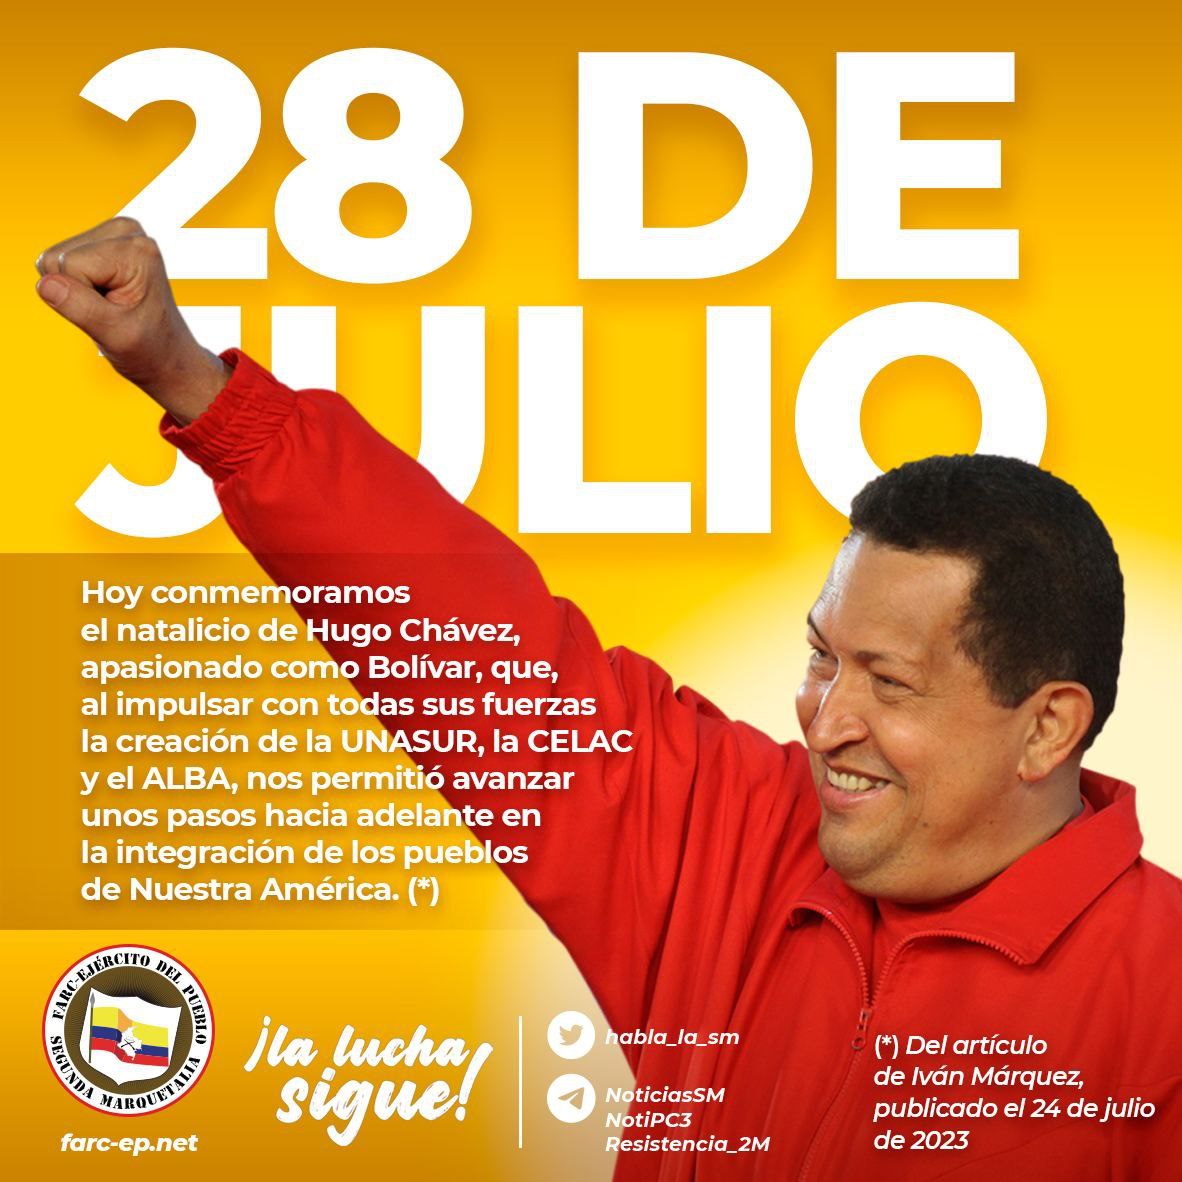 ¡Feliz Cumpleaños Comandante!
#ChavezPorSiempre
#ChavezVive